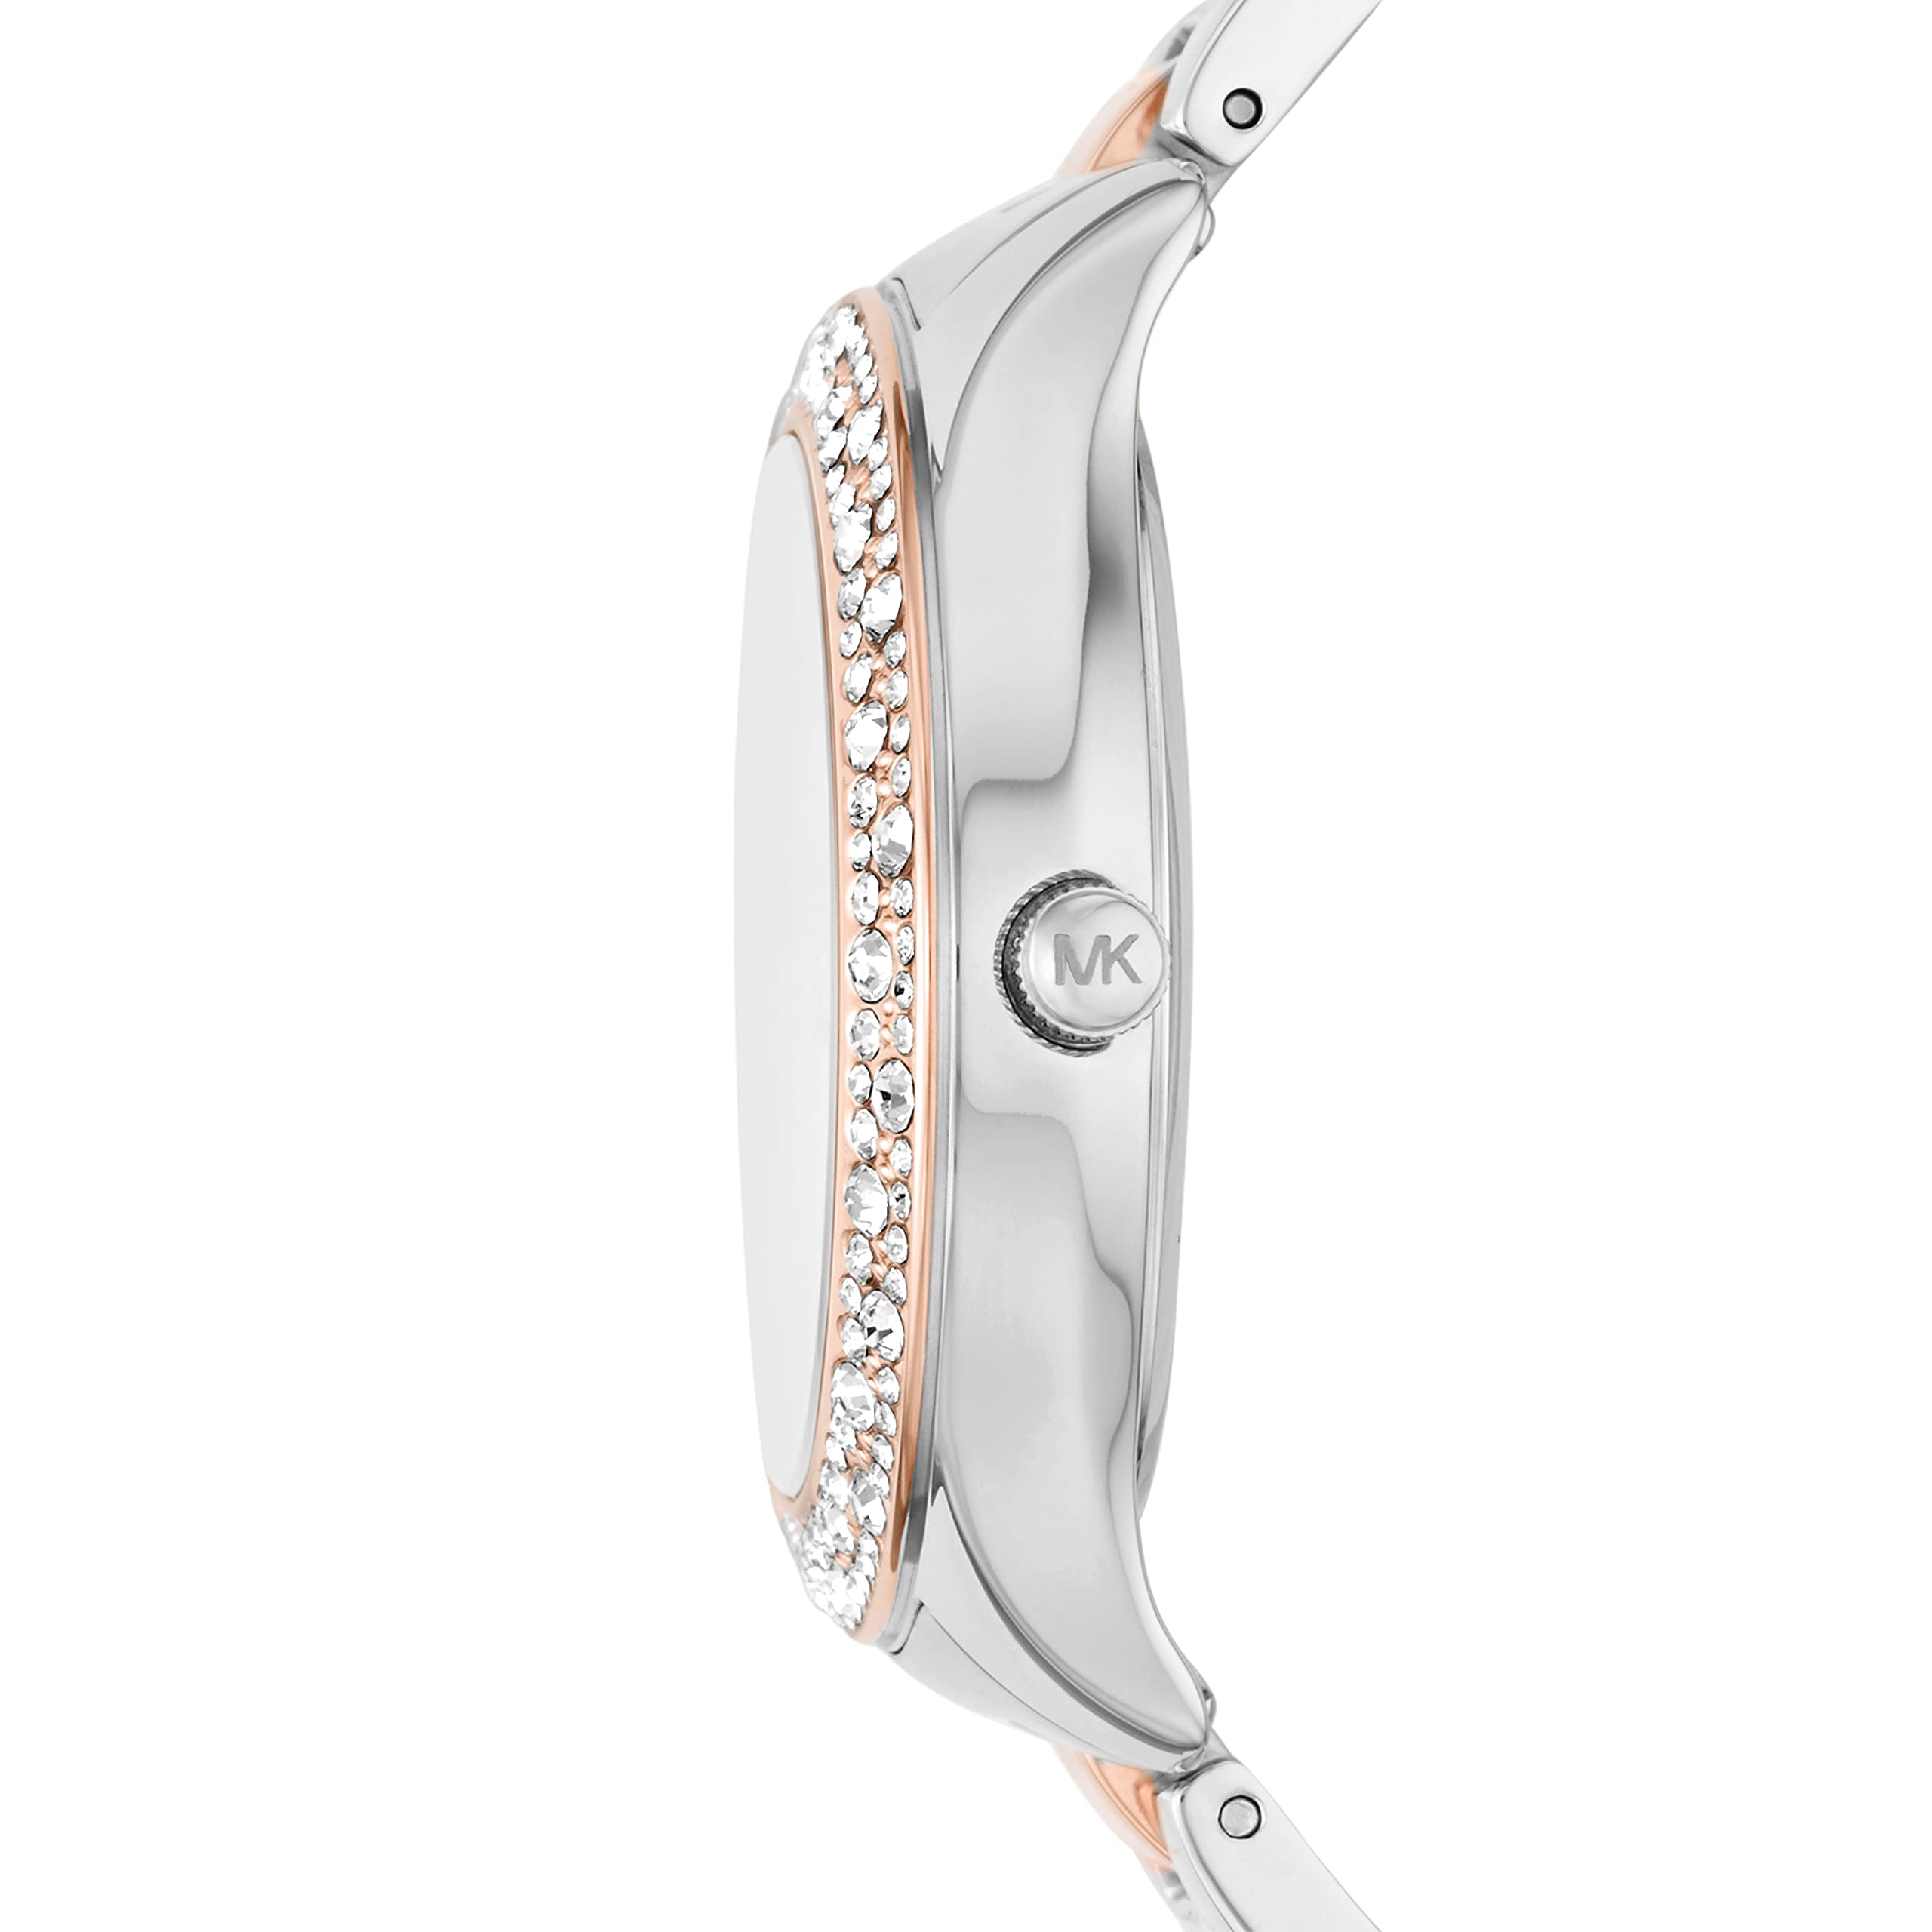 Michael Kors Women's Liliane Quartz Watch with Stainless Steel Strap